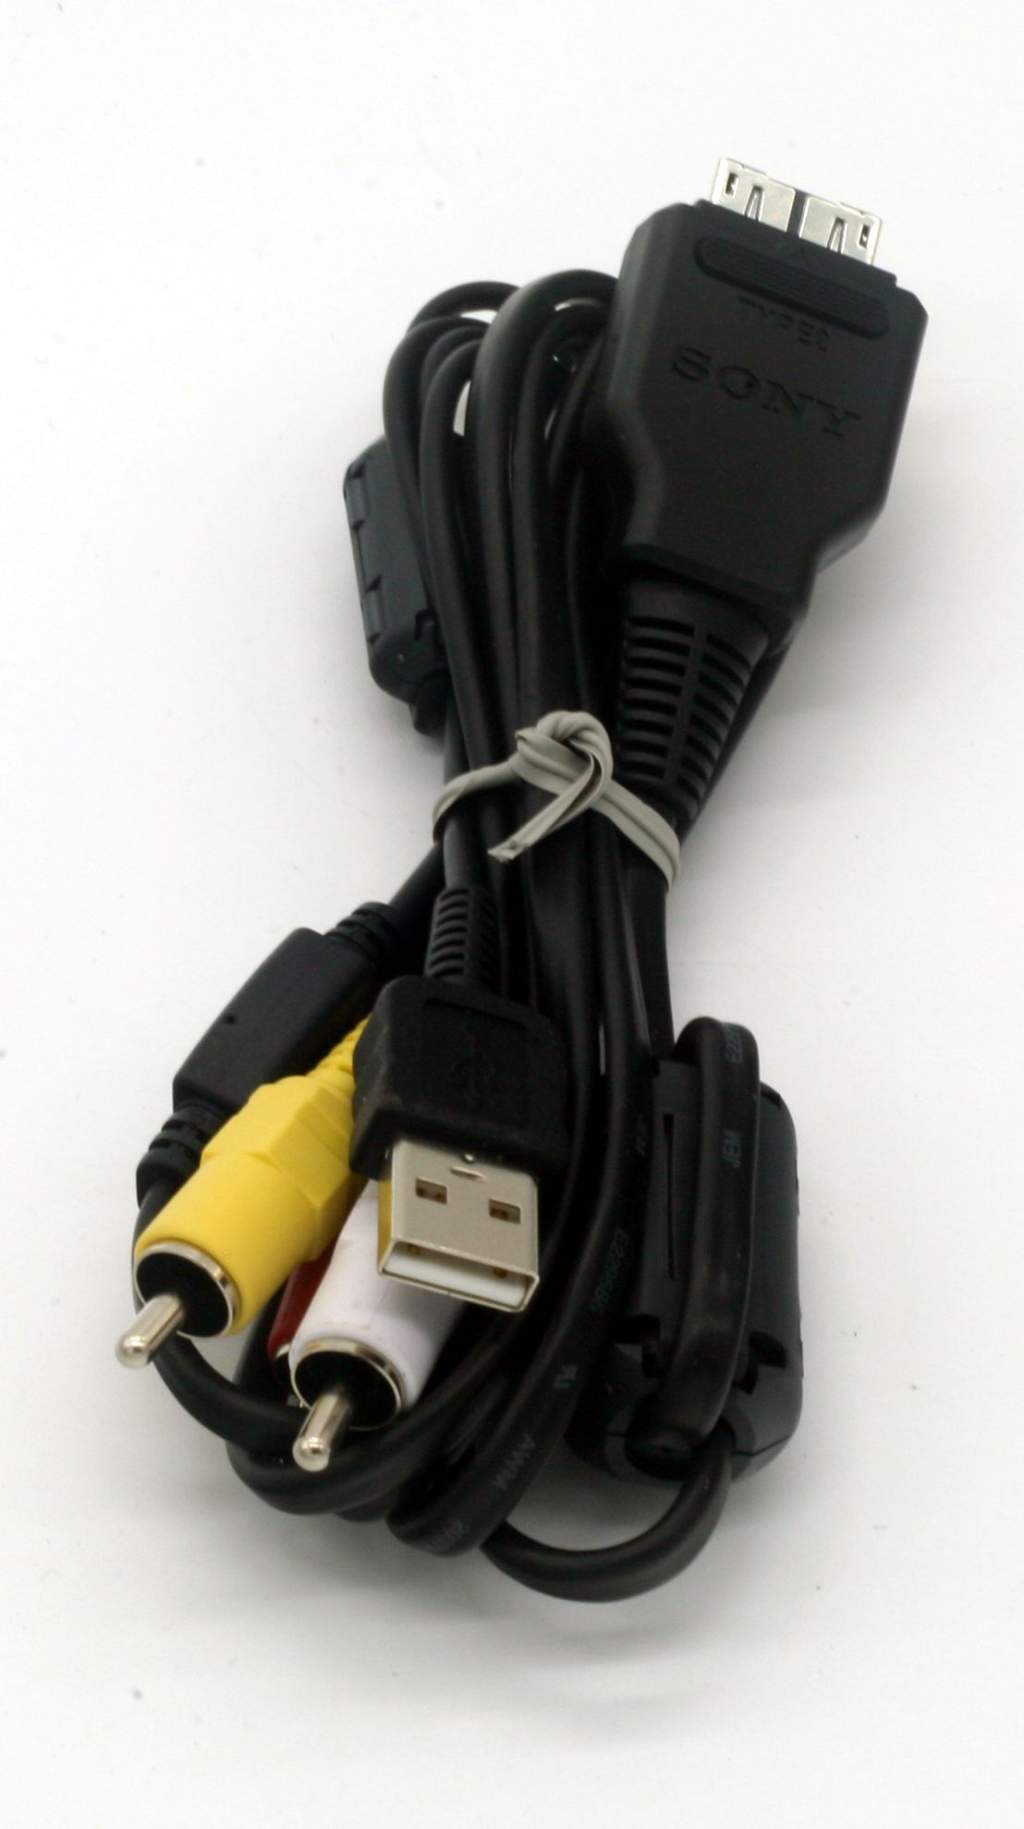 SONY VMC-MD2 USB and AV Cable